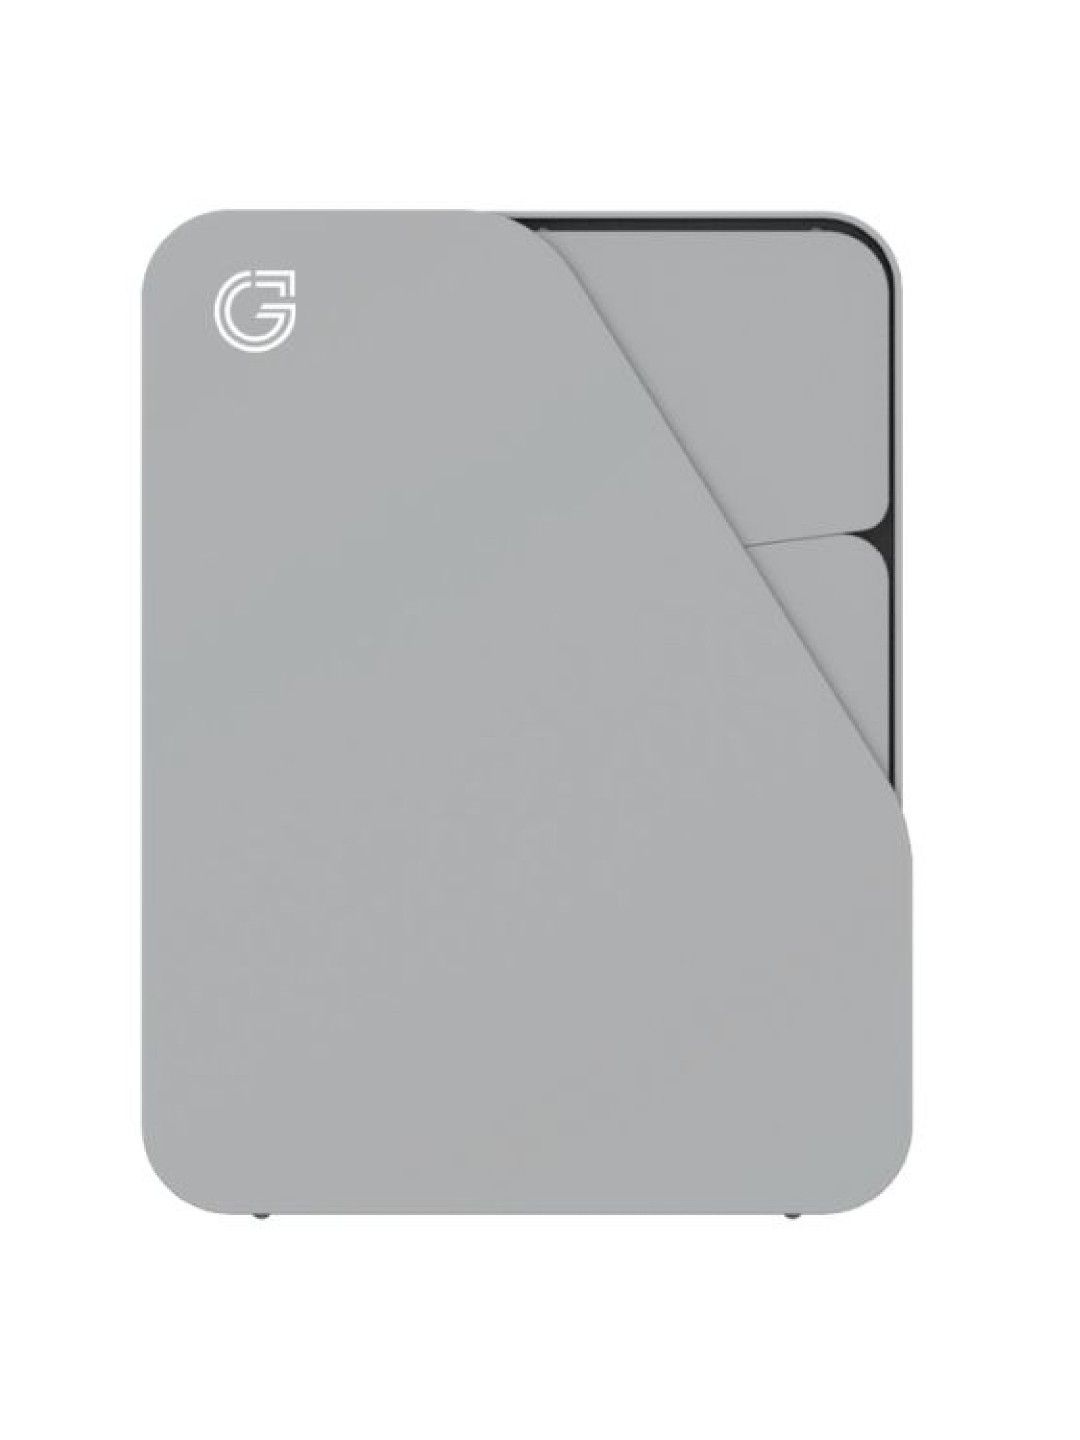 Sunbeams Lifestyle Gray Label Premium Office Desk Accessories Organizer (No Color- Image 1)